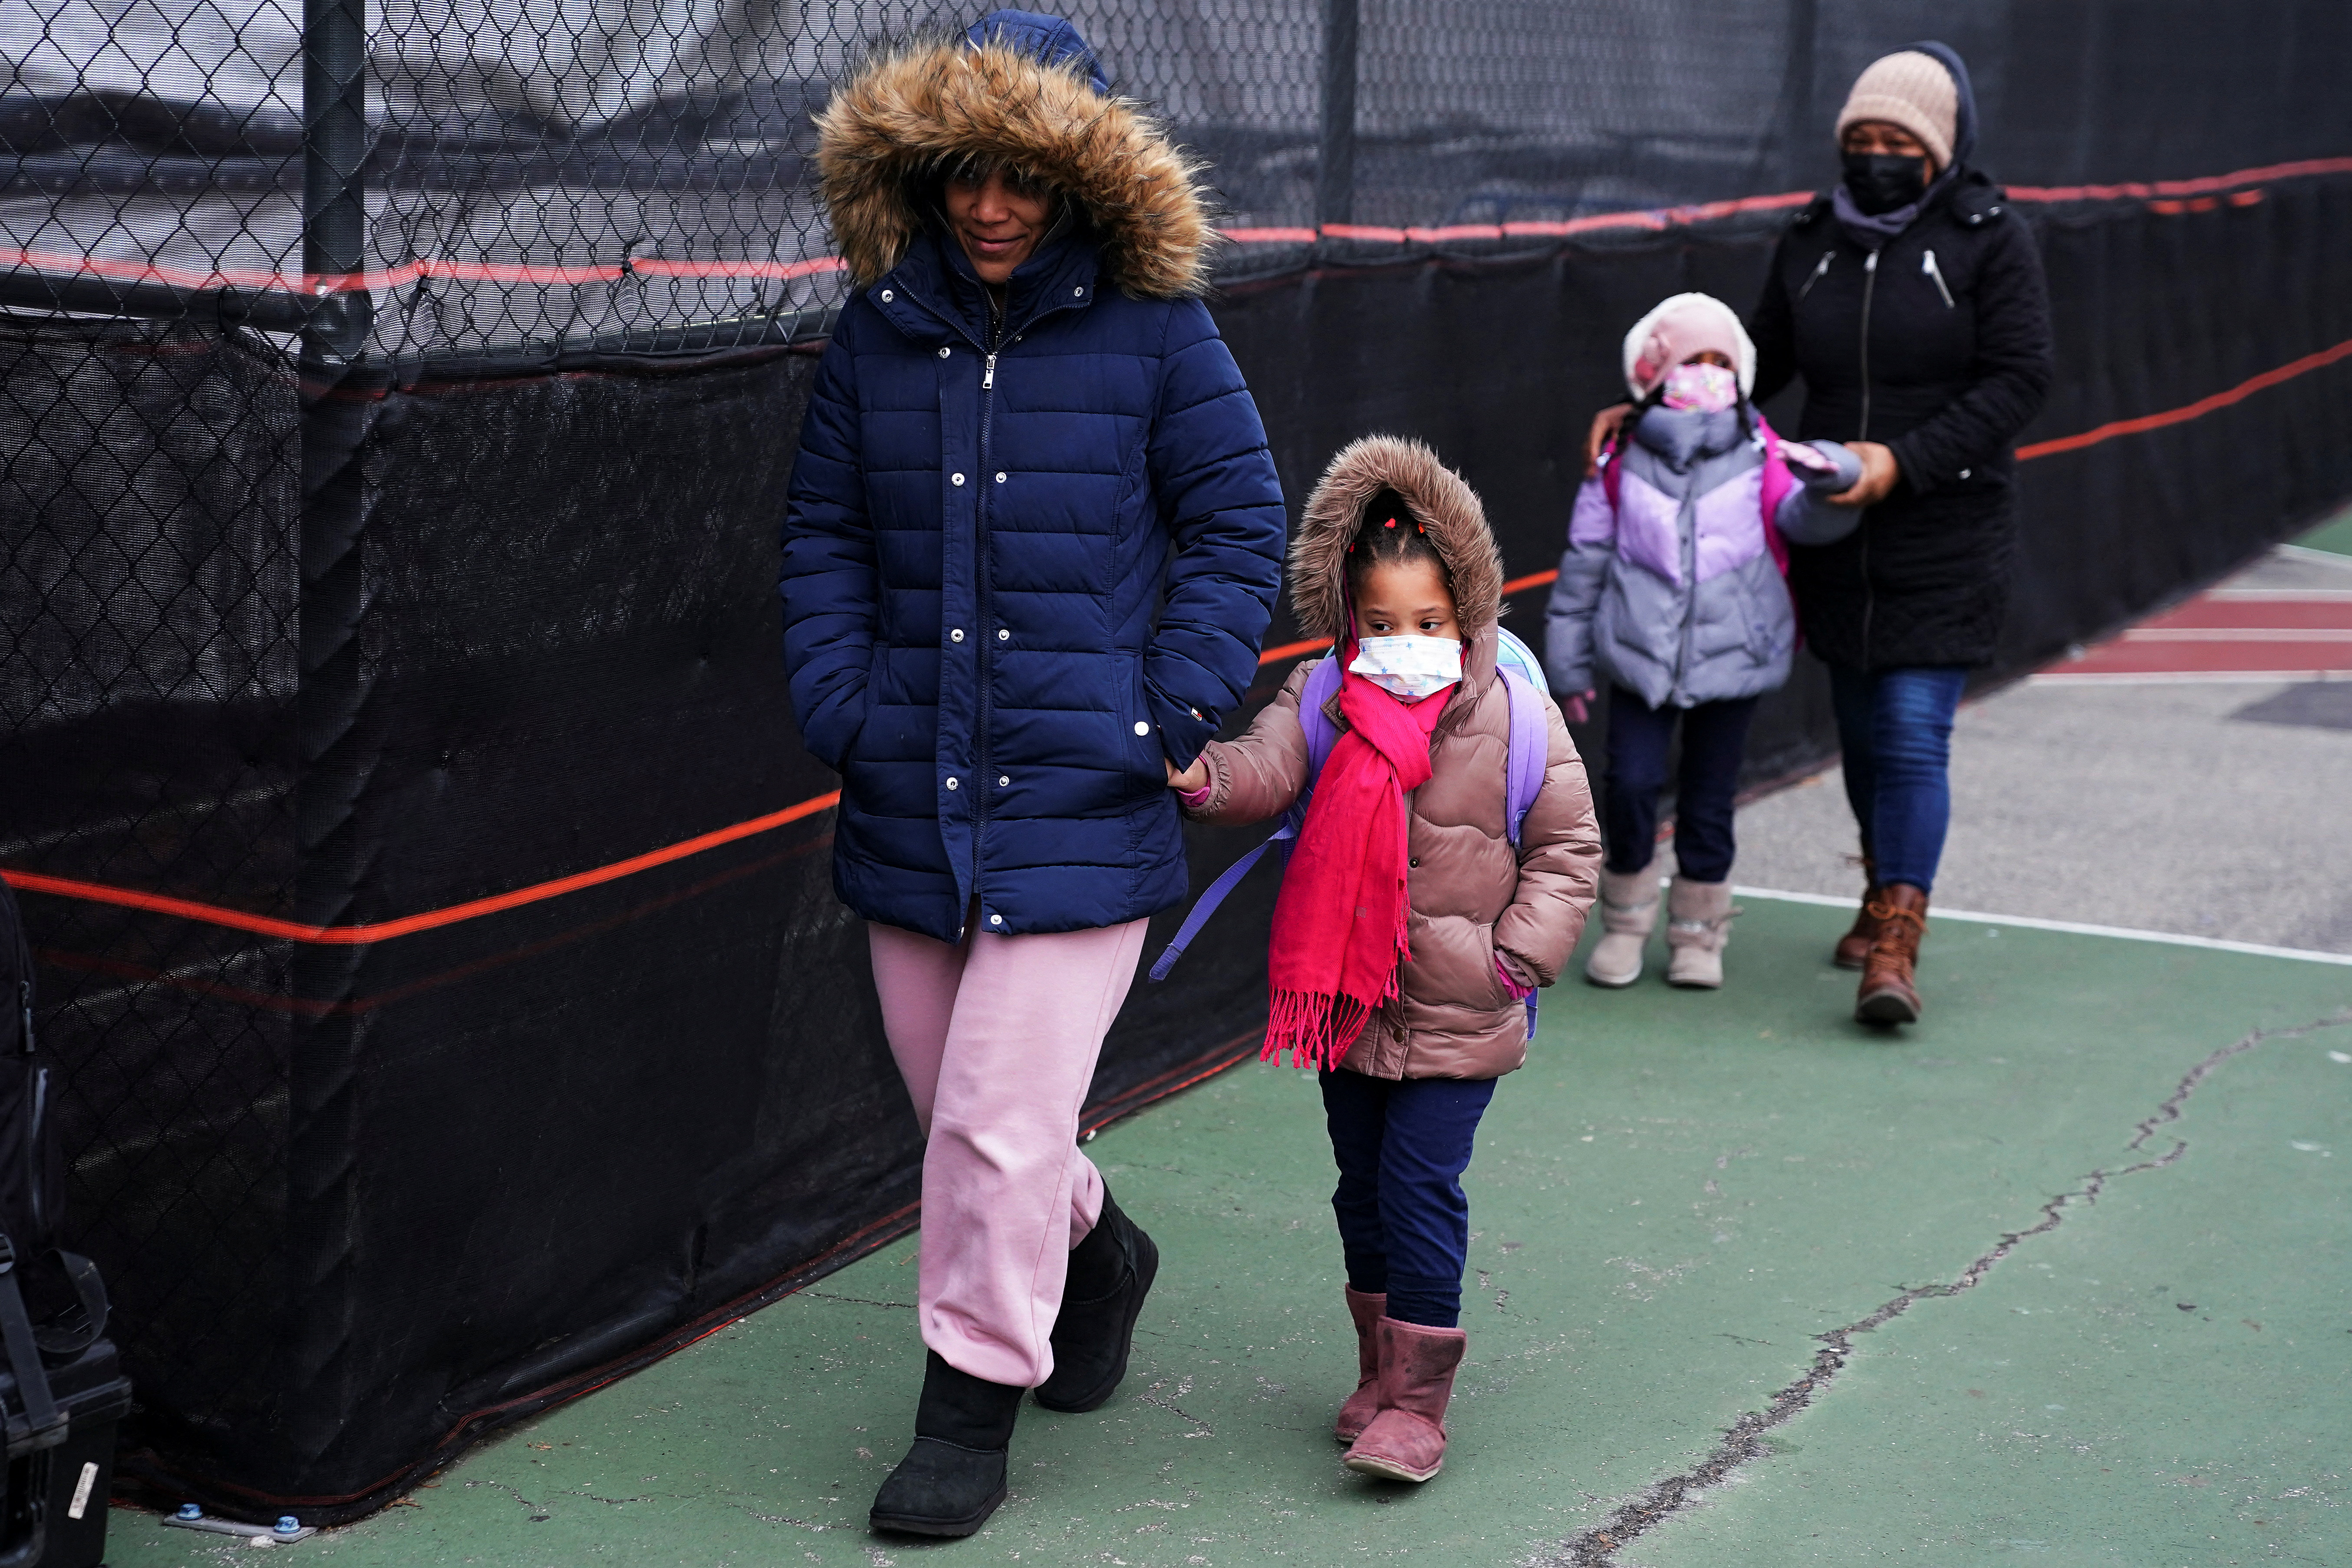 Children arrive at Bronx Elementary School 385, during the coronavirus disease (COVID-19) pandemic in the Bronx borough of New York City, New York, U.S., January 3, 2022. REUTERS/Carlo Allegri